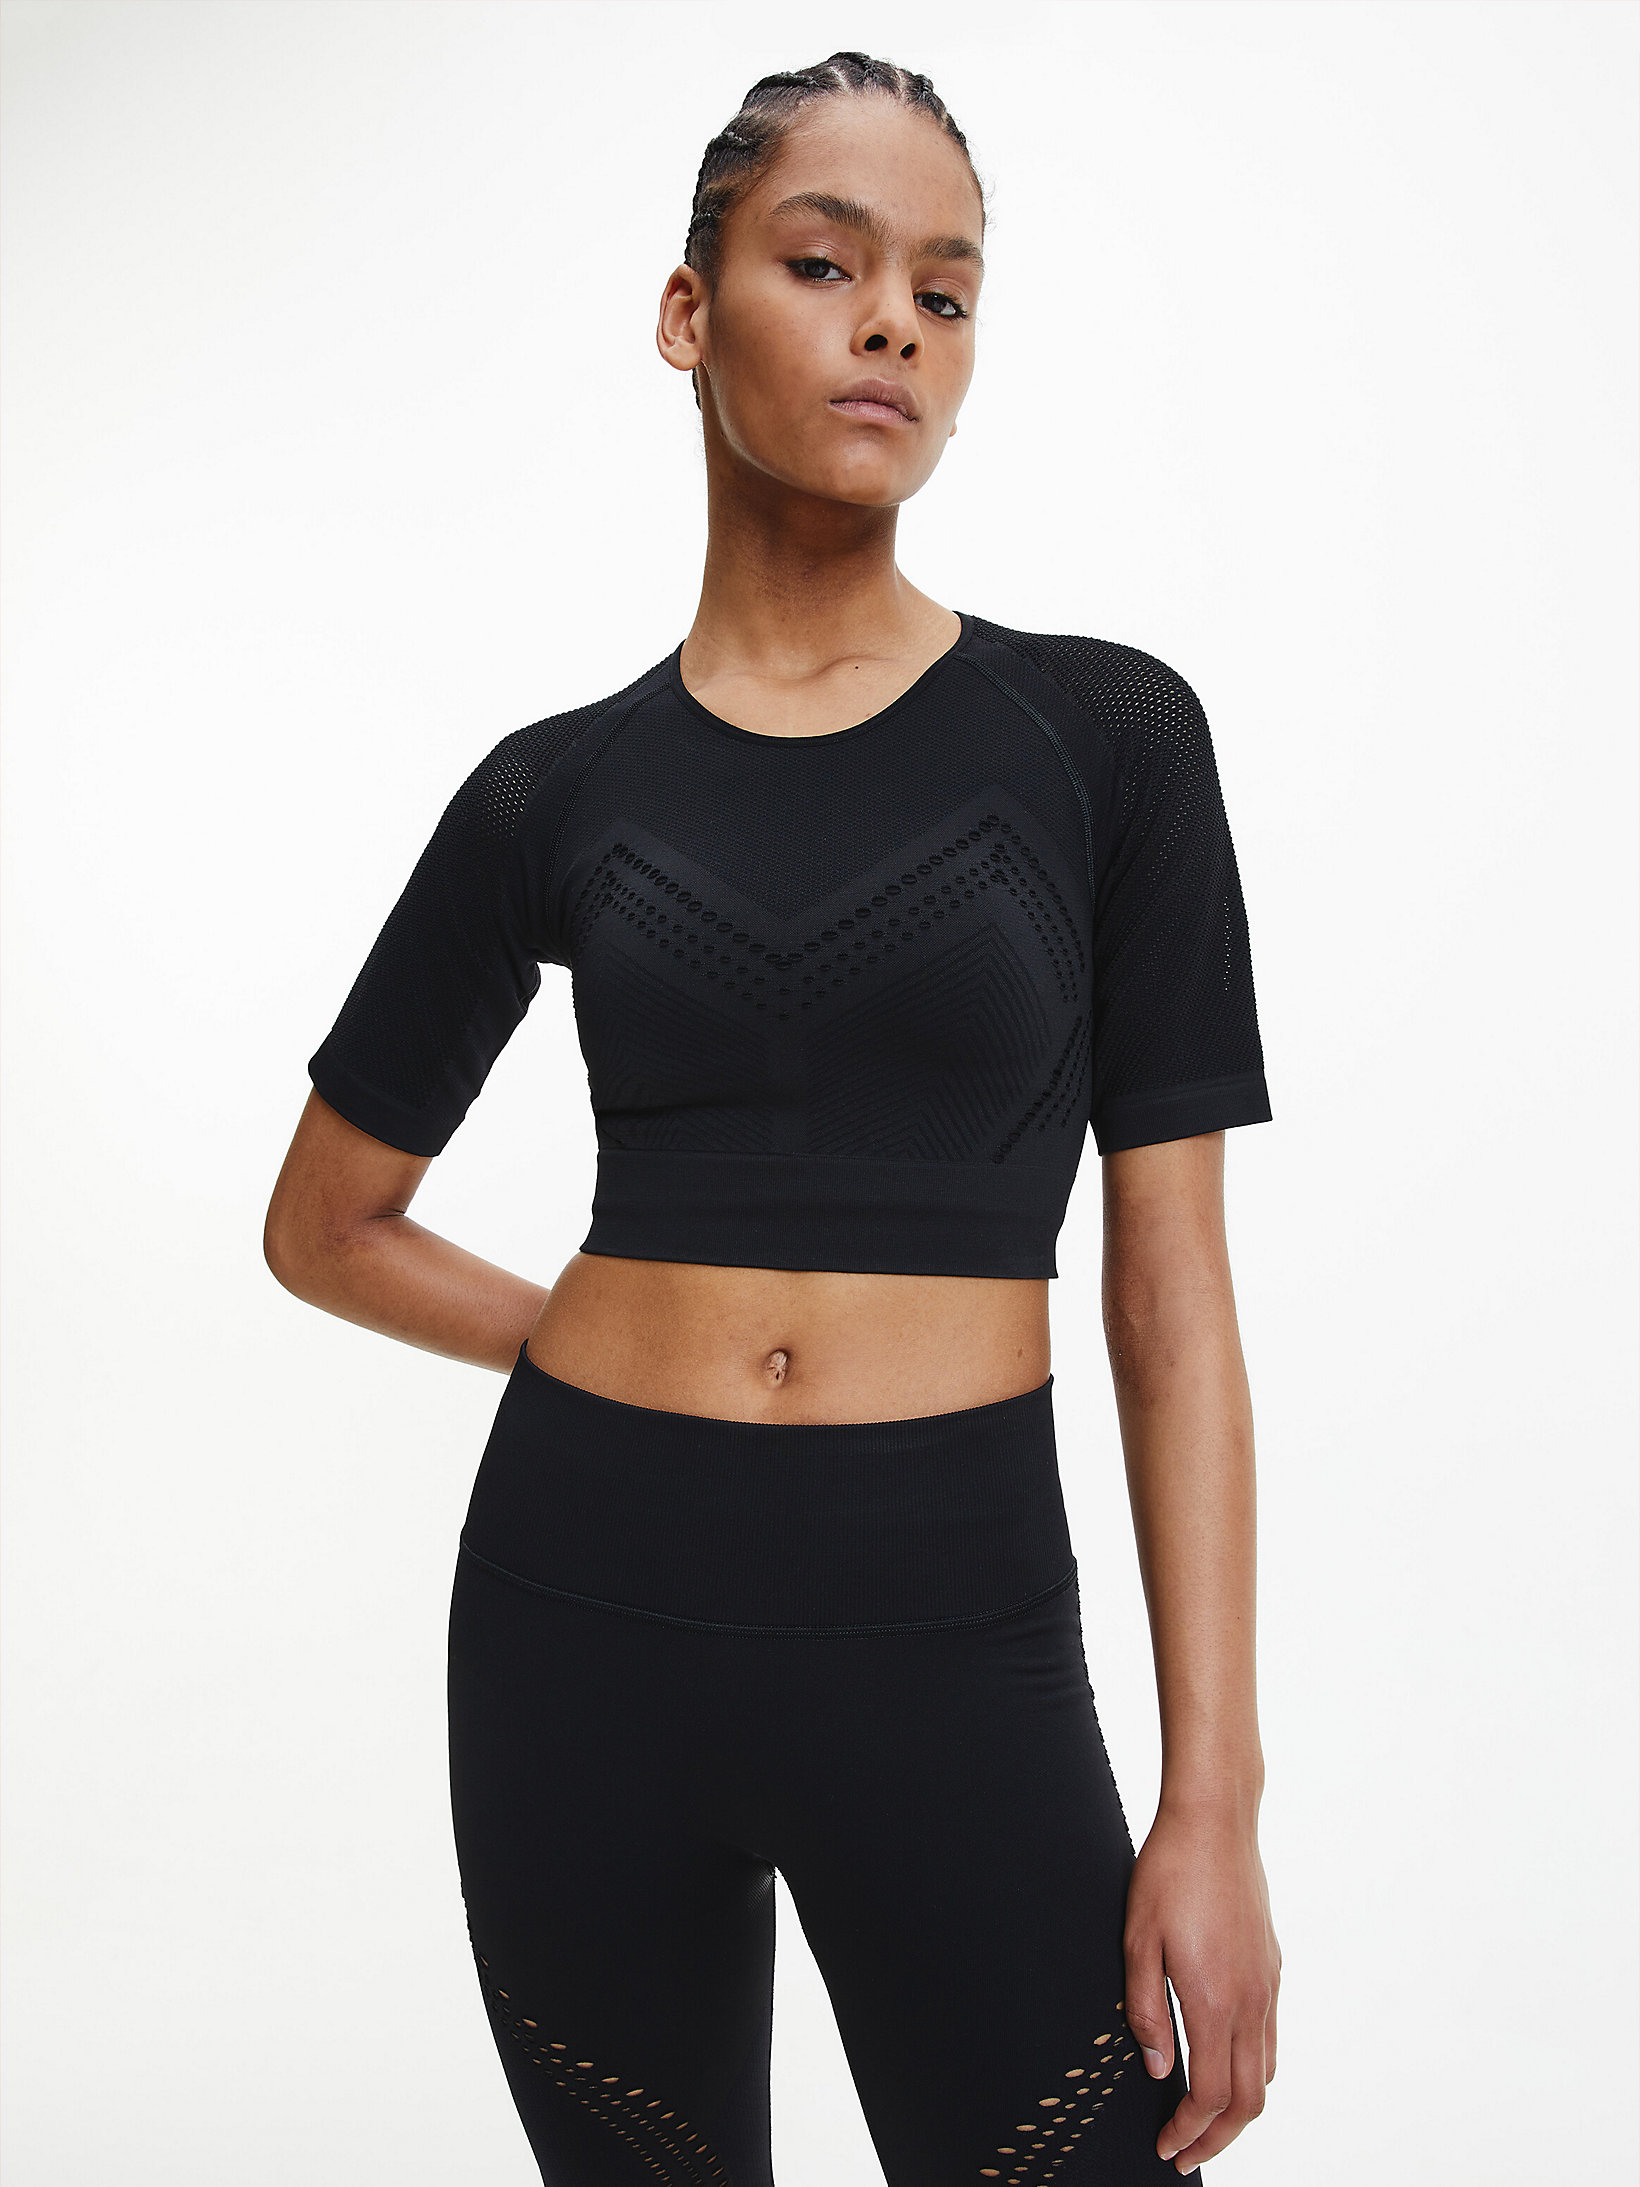 CK Black > Cropped Sport T-Shirt > undefined dames - Calvin Klein